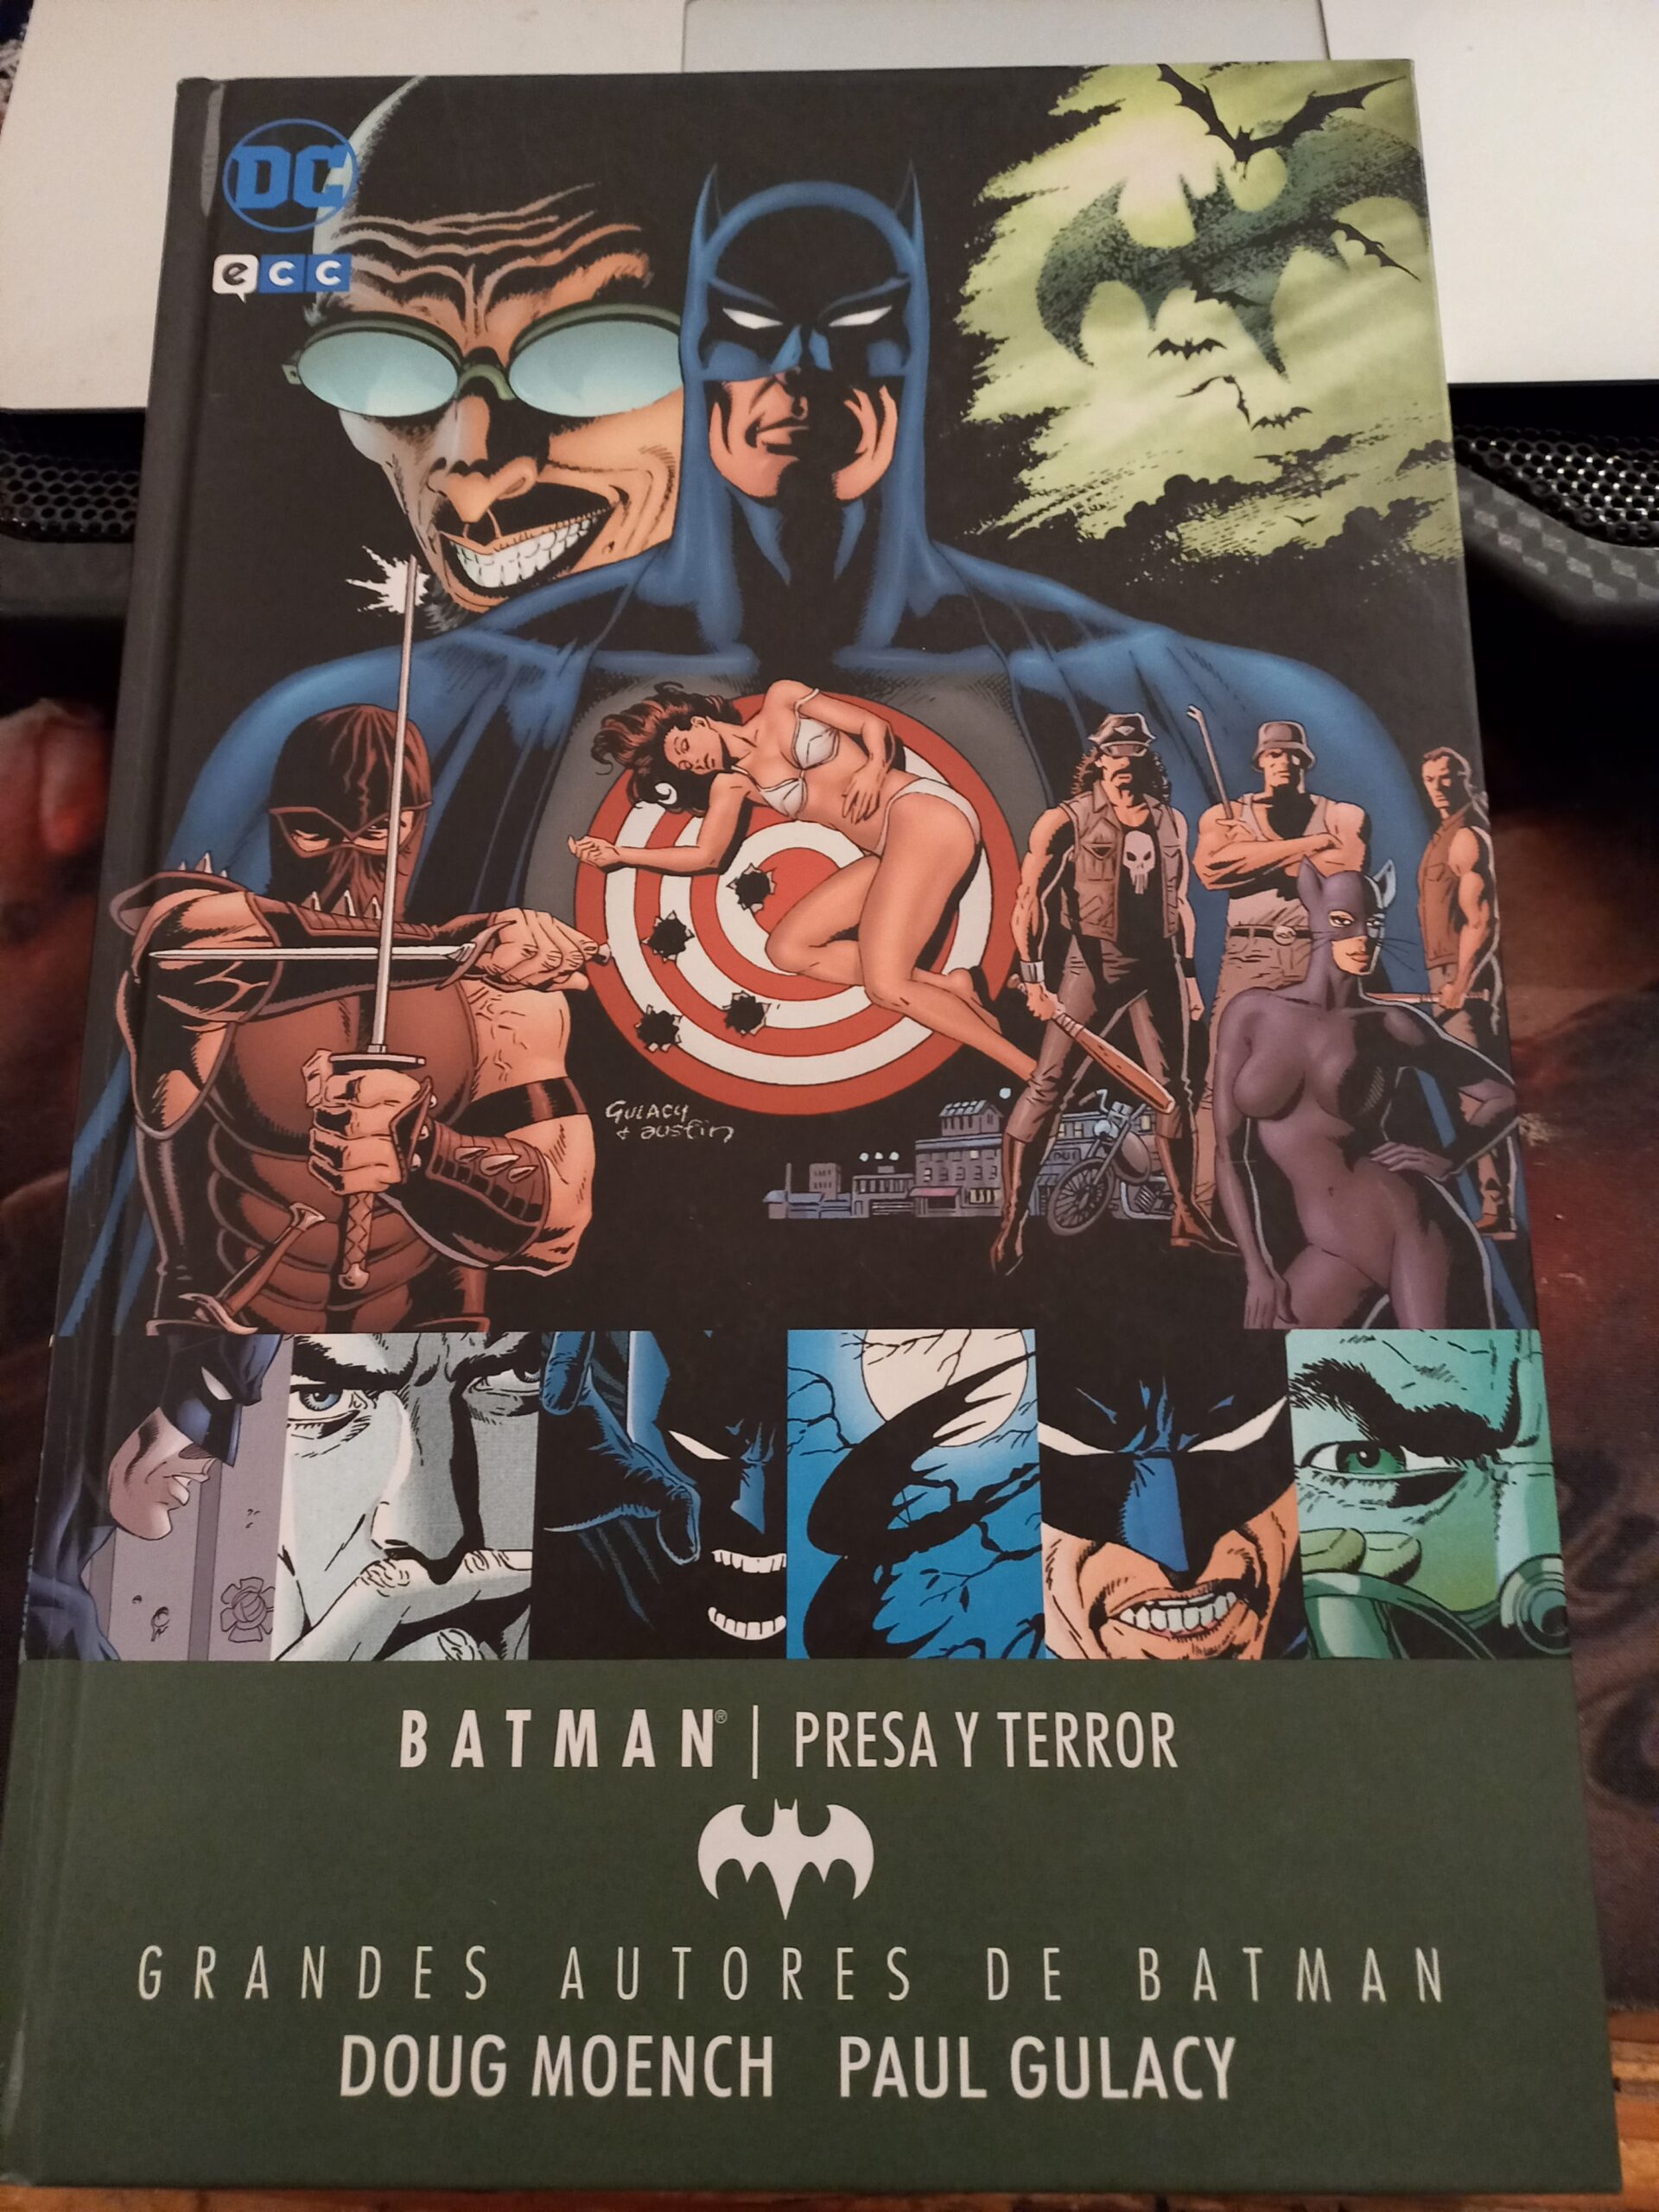 Batman, Presa y Terror - Zienke Comics